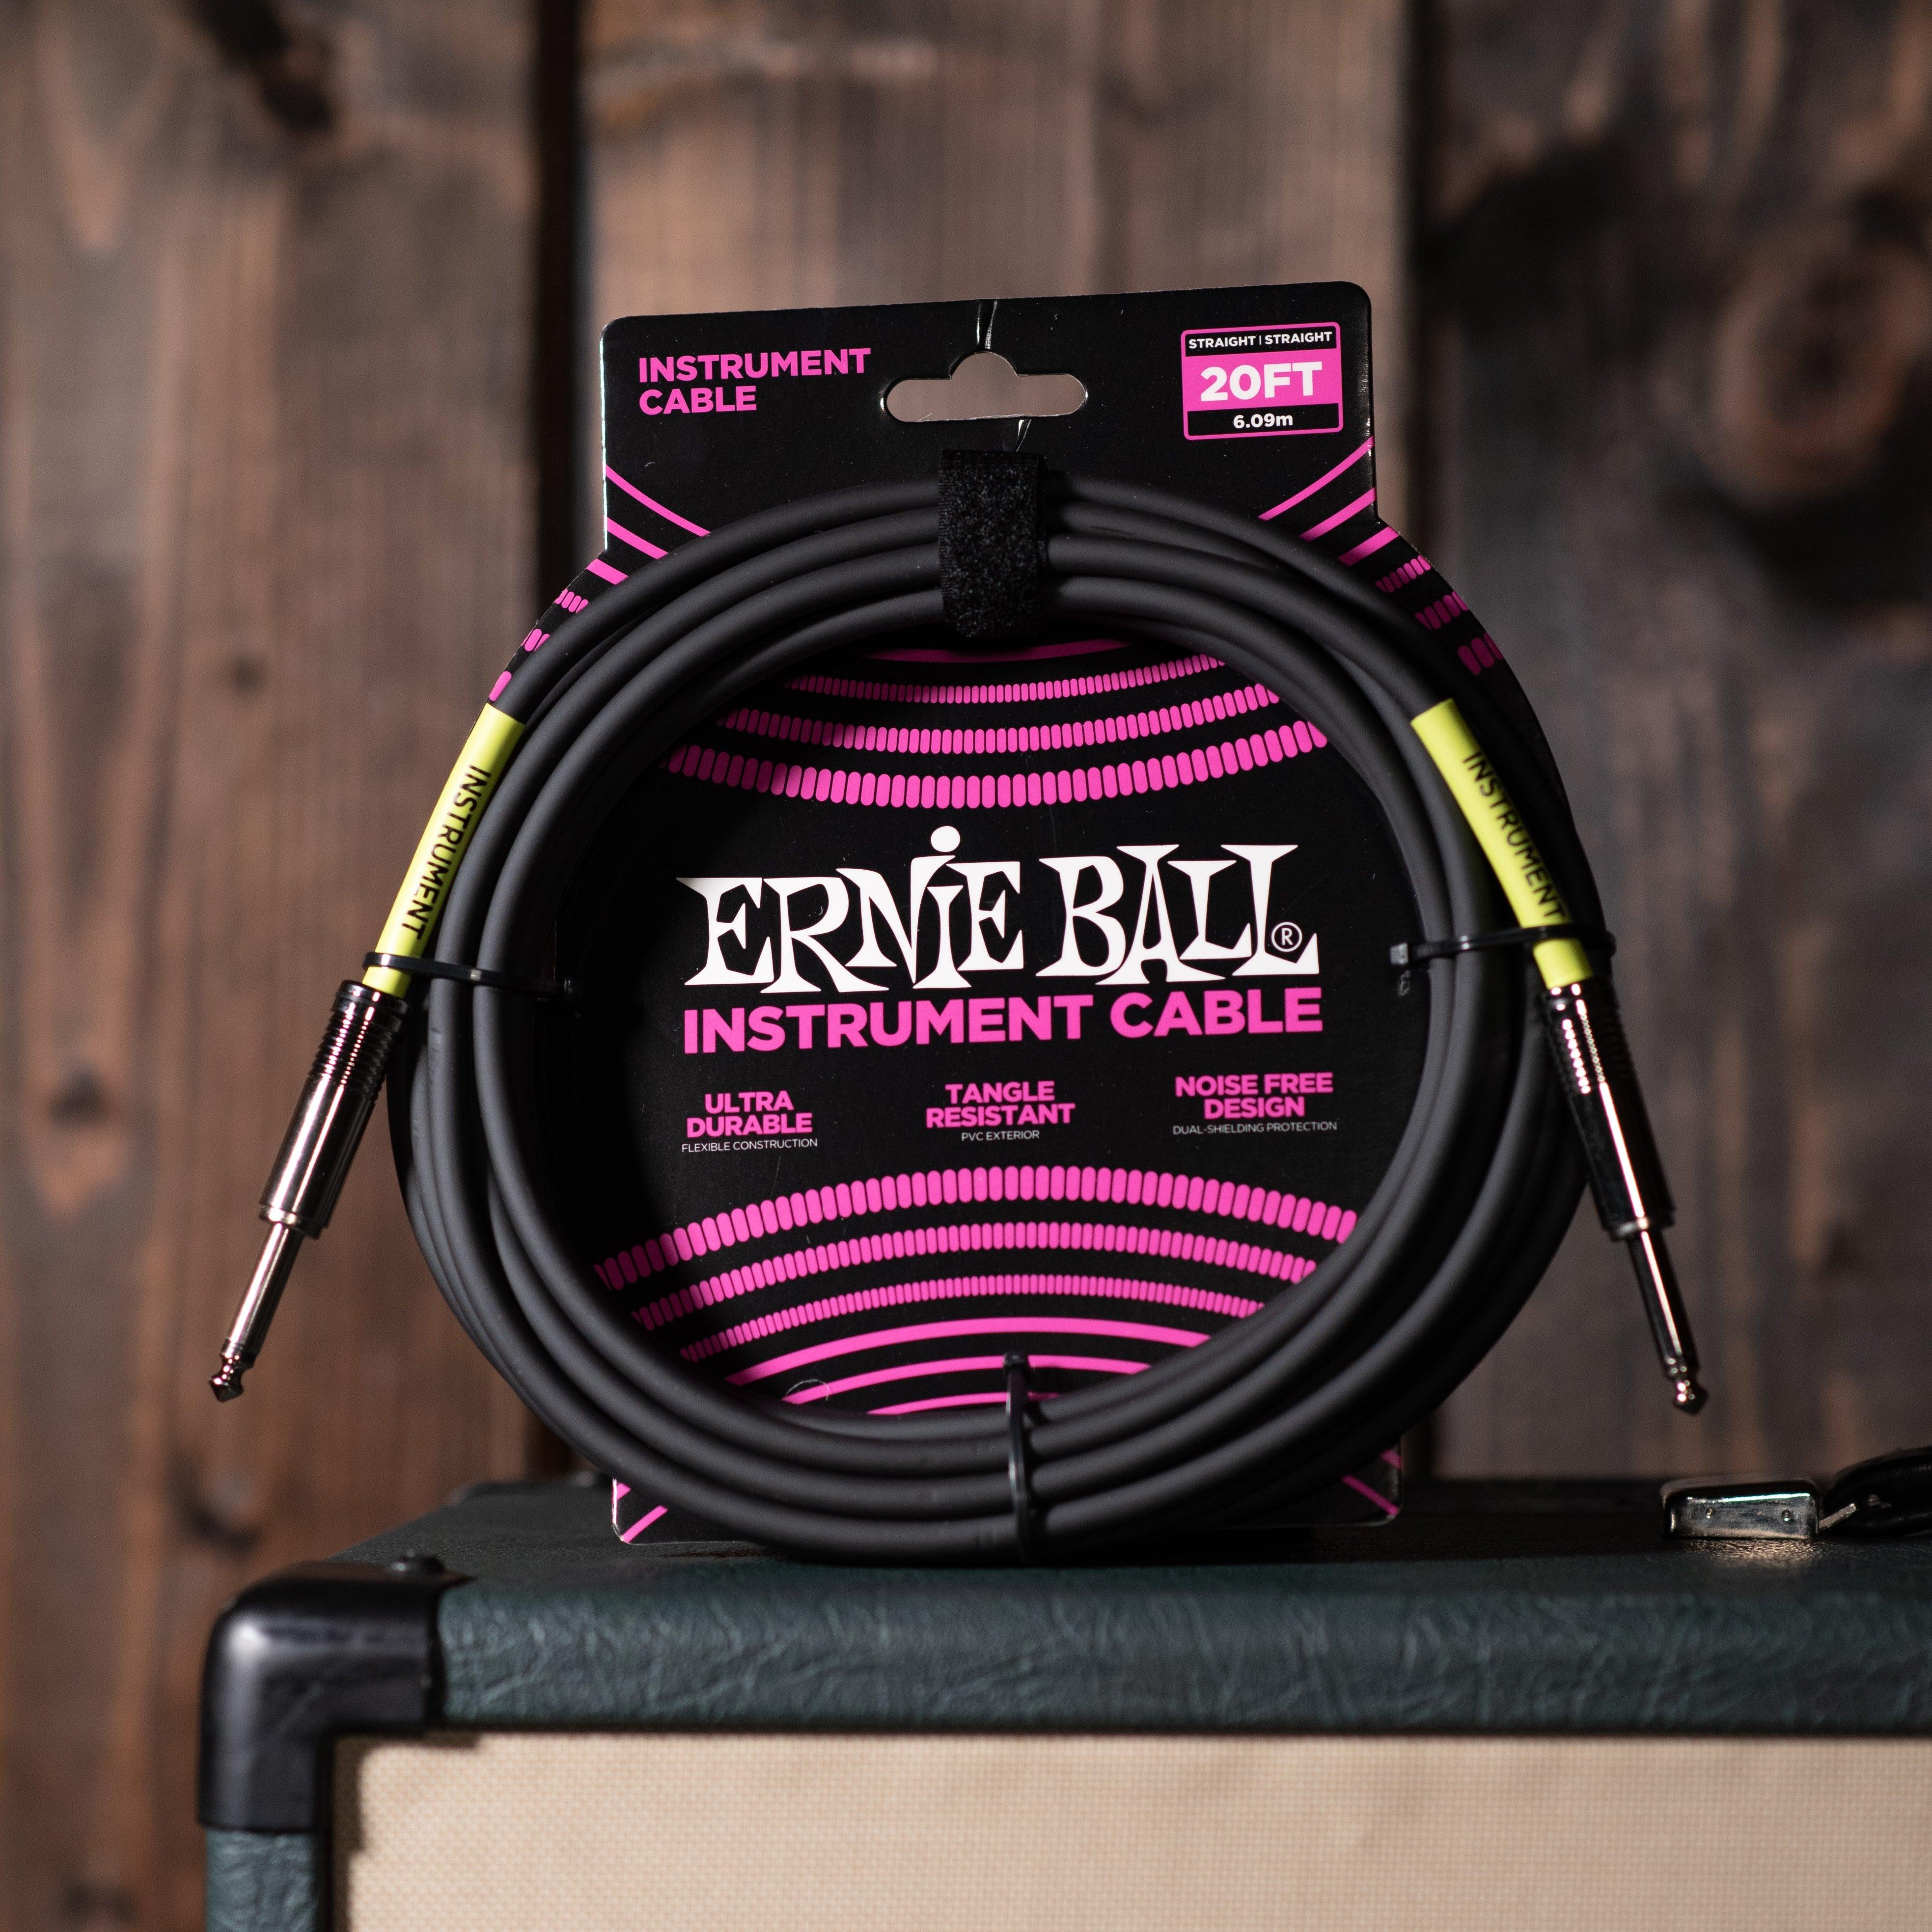 Ernie Ball Instrument Cable Black 20 ft. - Impulse Music Co.